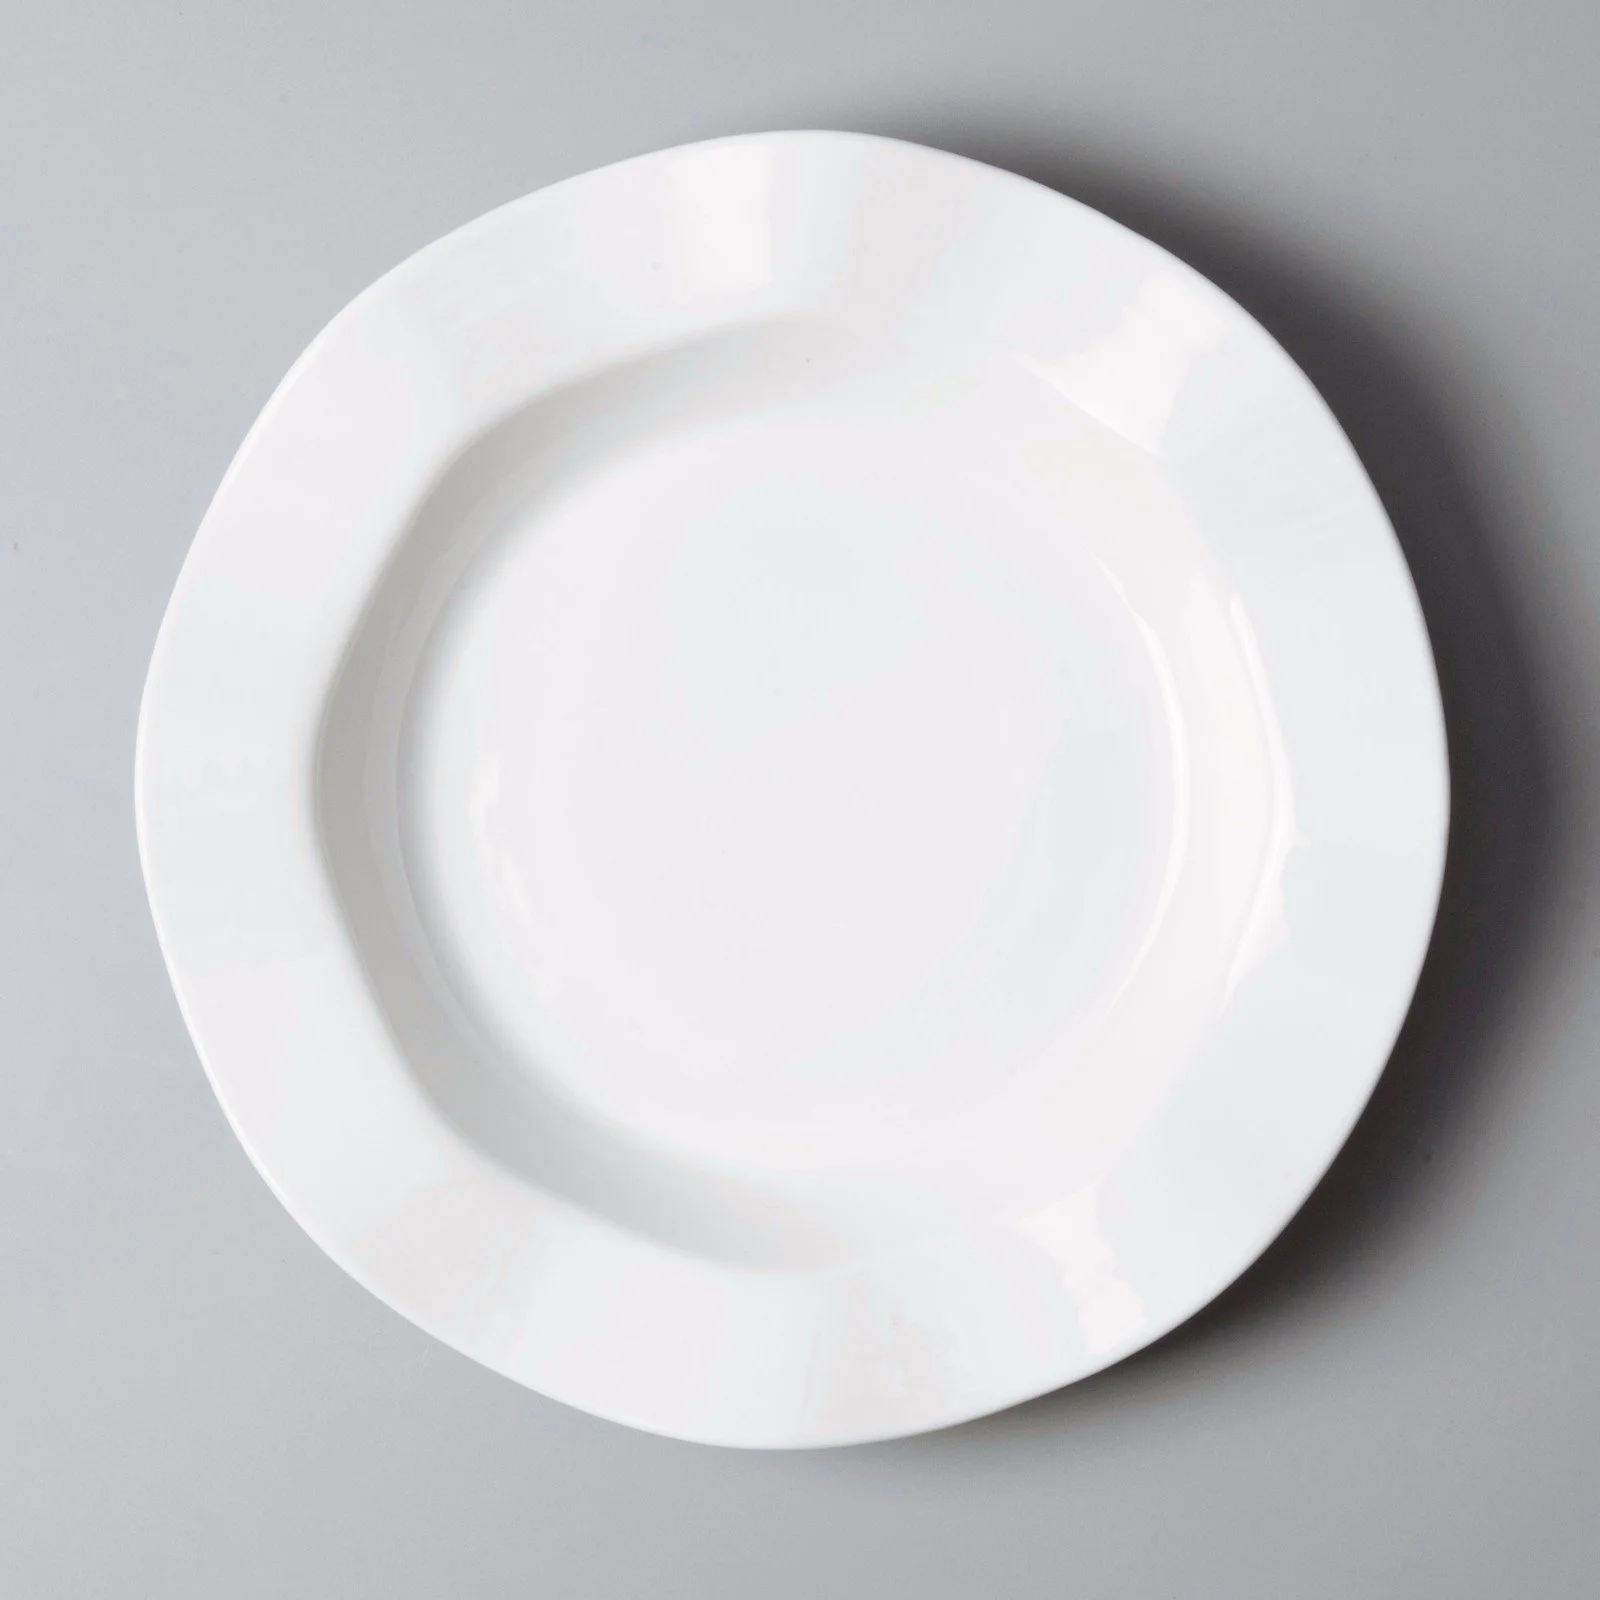 square restaurant dinner plates cheap series for home